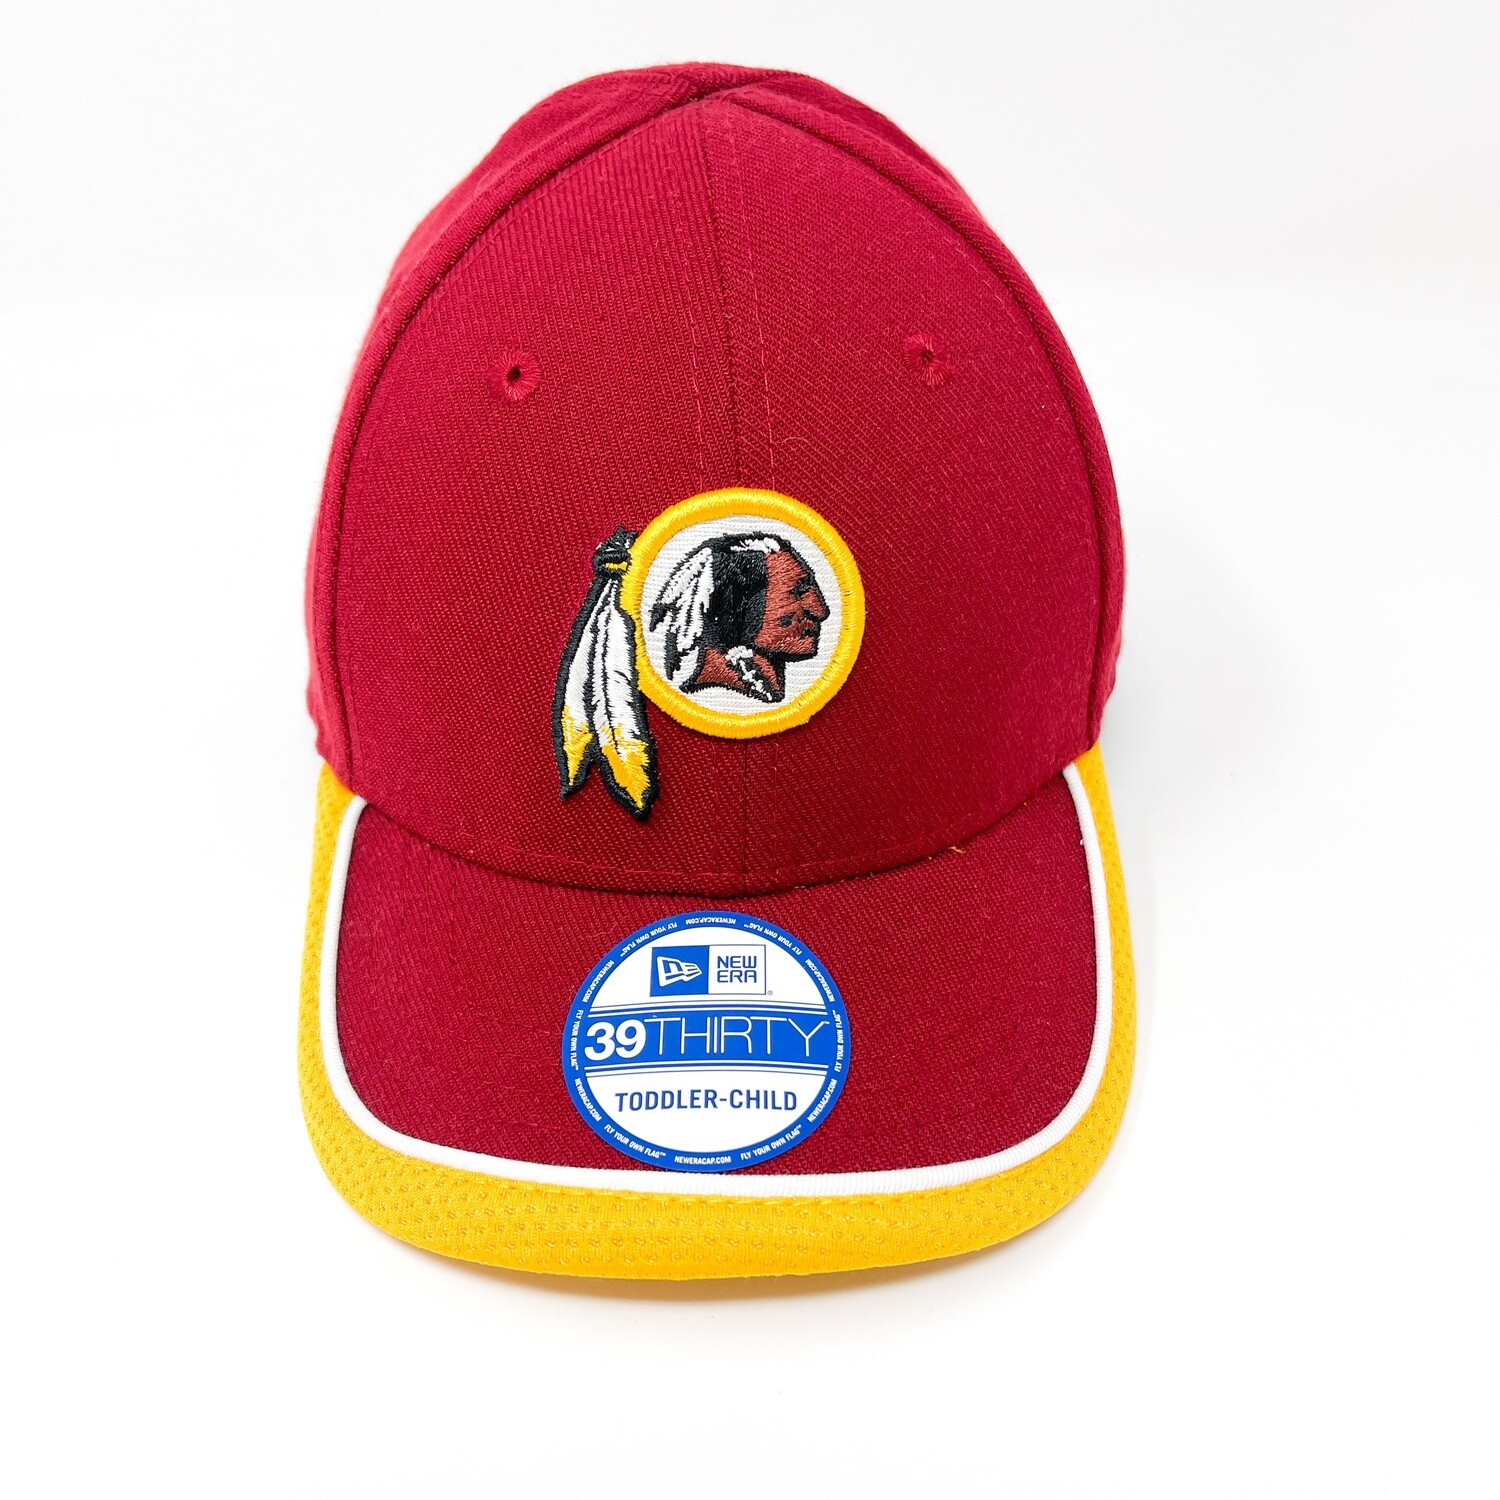 Washington Redskins New Era 39Thirty Toddler-Child Hat